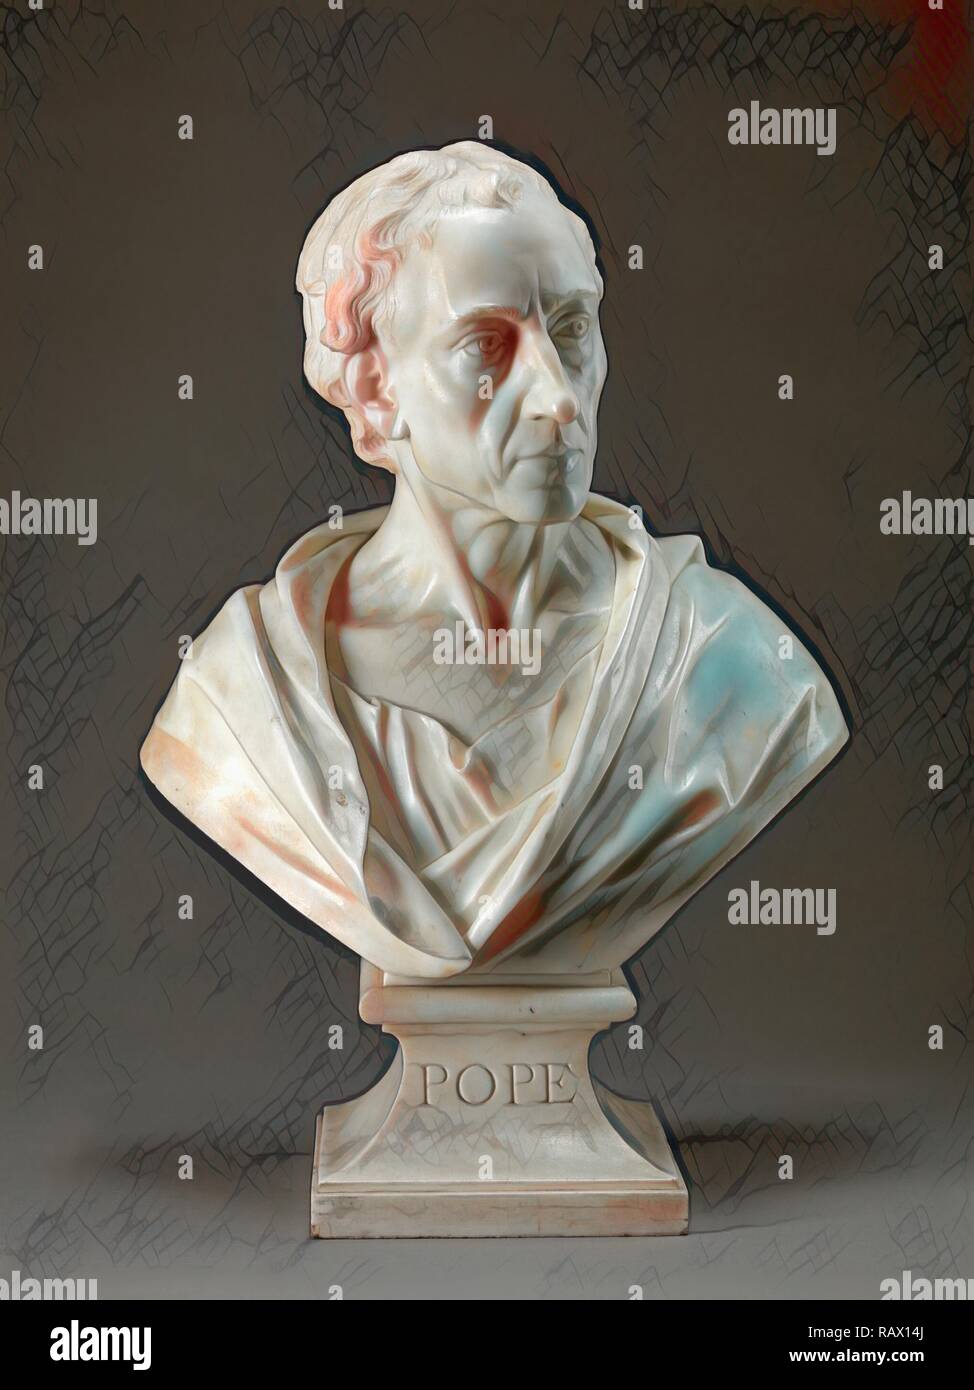 Alexander Pope Inscribed, chiseled on front of socle: 'POPE', on proper left under sitter's shoulder: 'ALEX. POPE reimagined Stock Photo